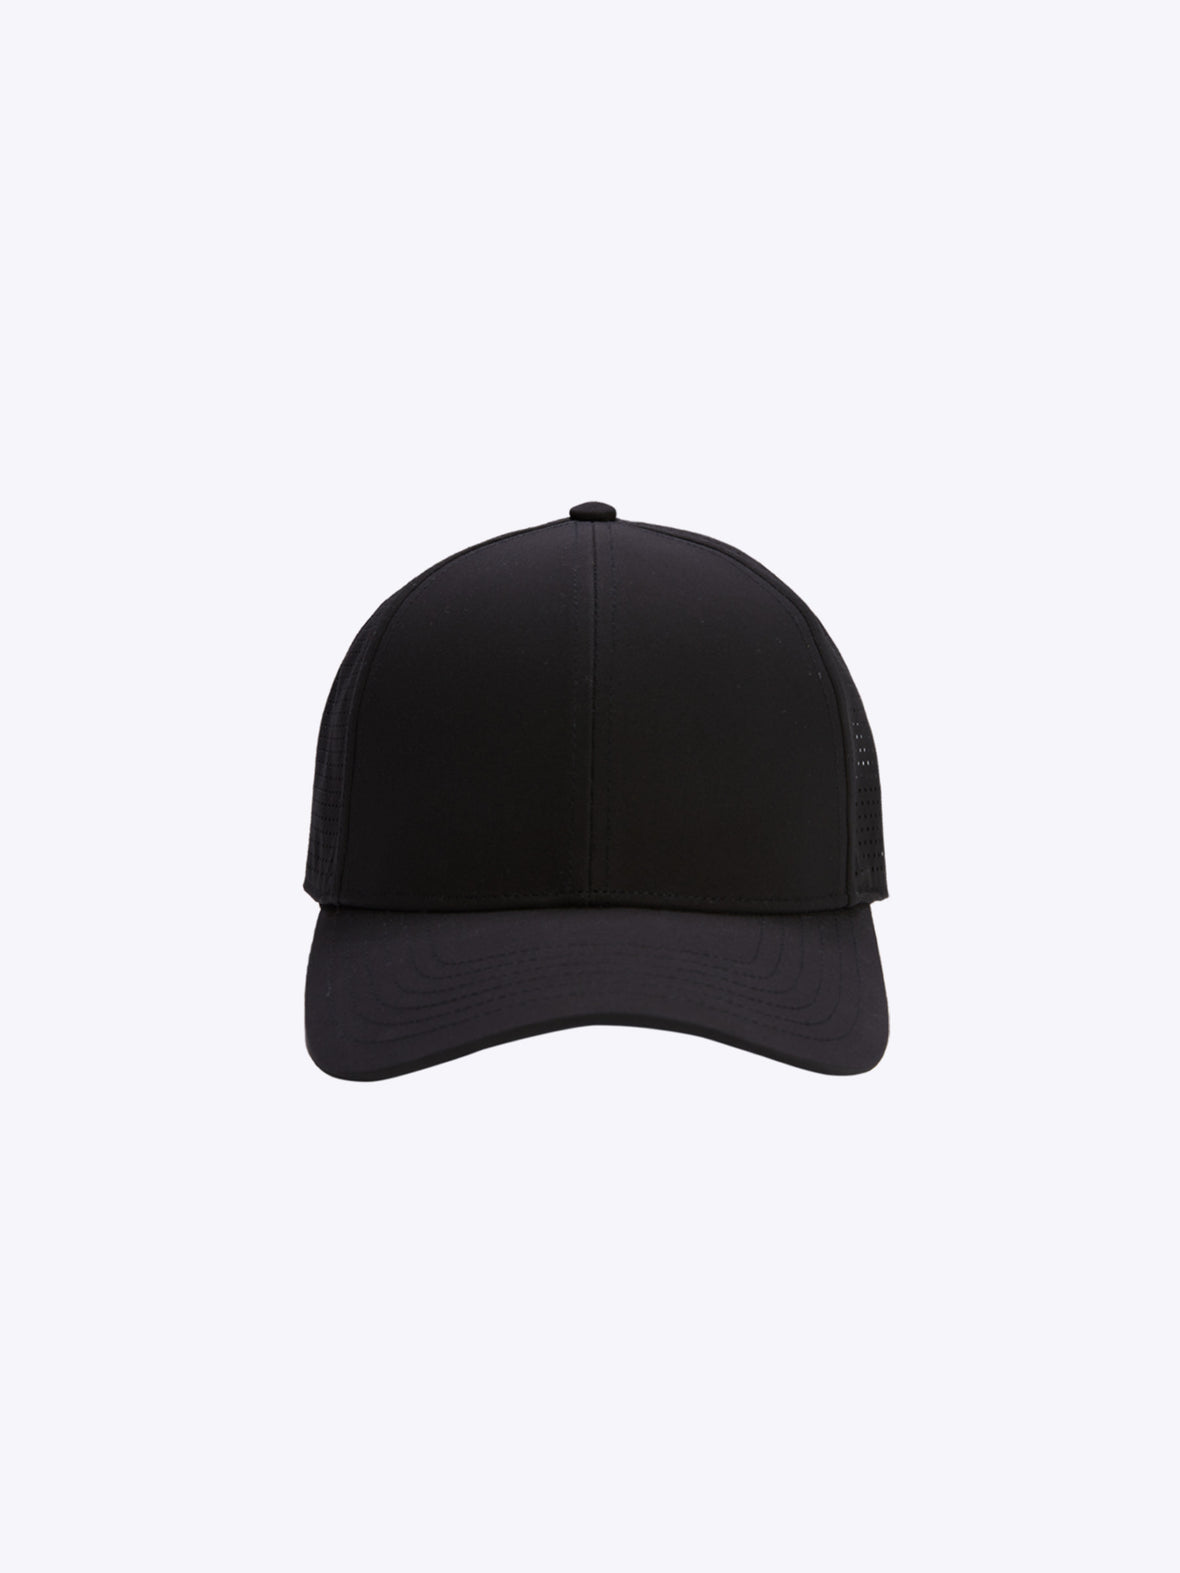 AO Perf Hat | Black